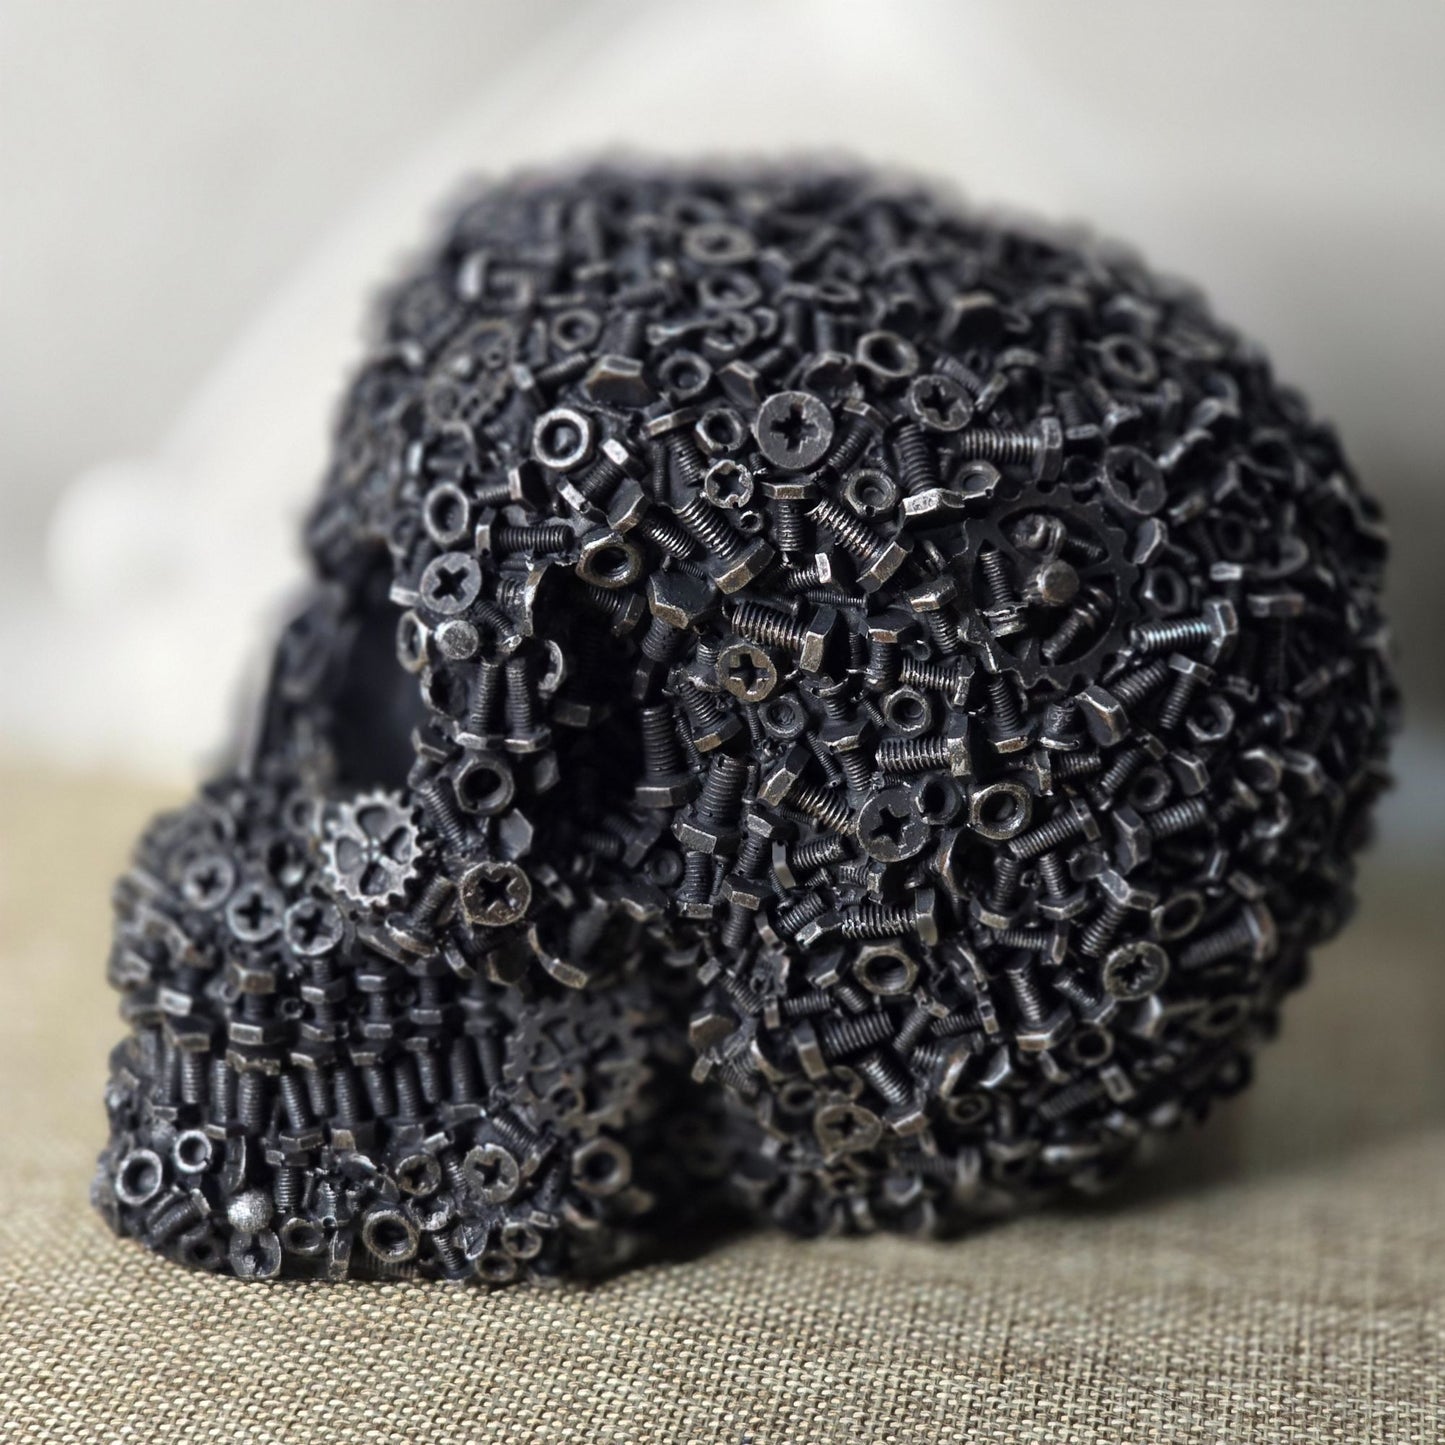 Metal 𝐿𝑜𝑜𝑘 Hardware Skull Sculpture - Unique Steampunk Decor Piece